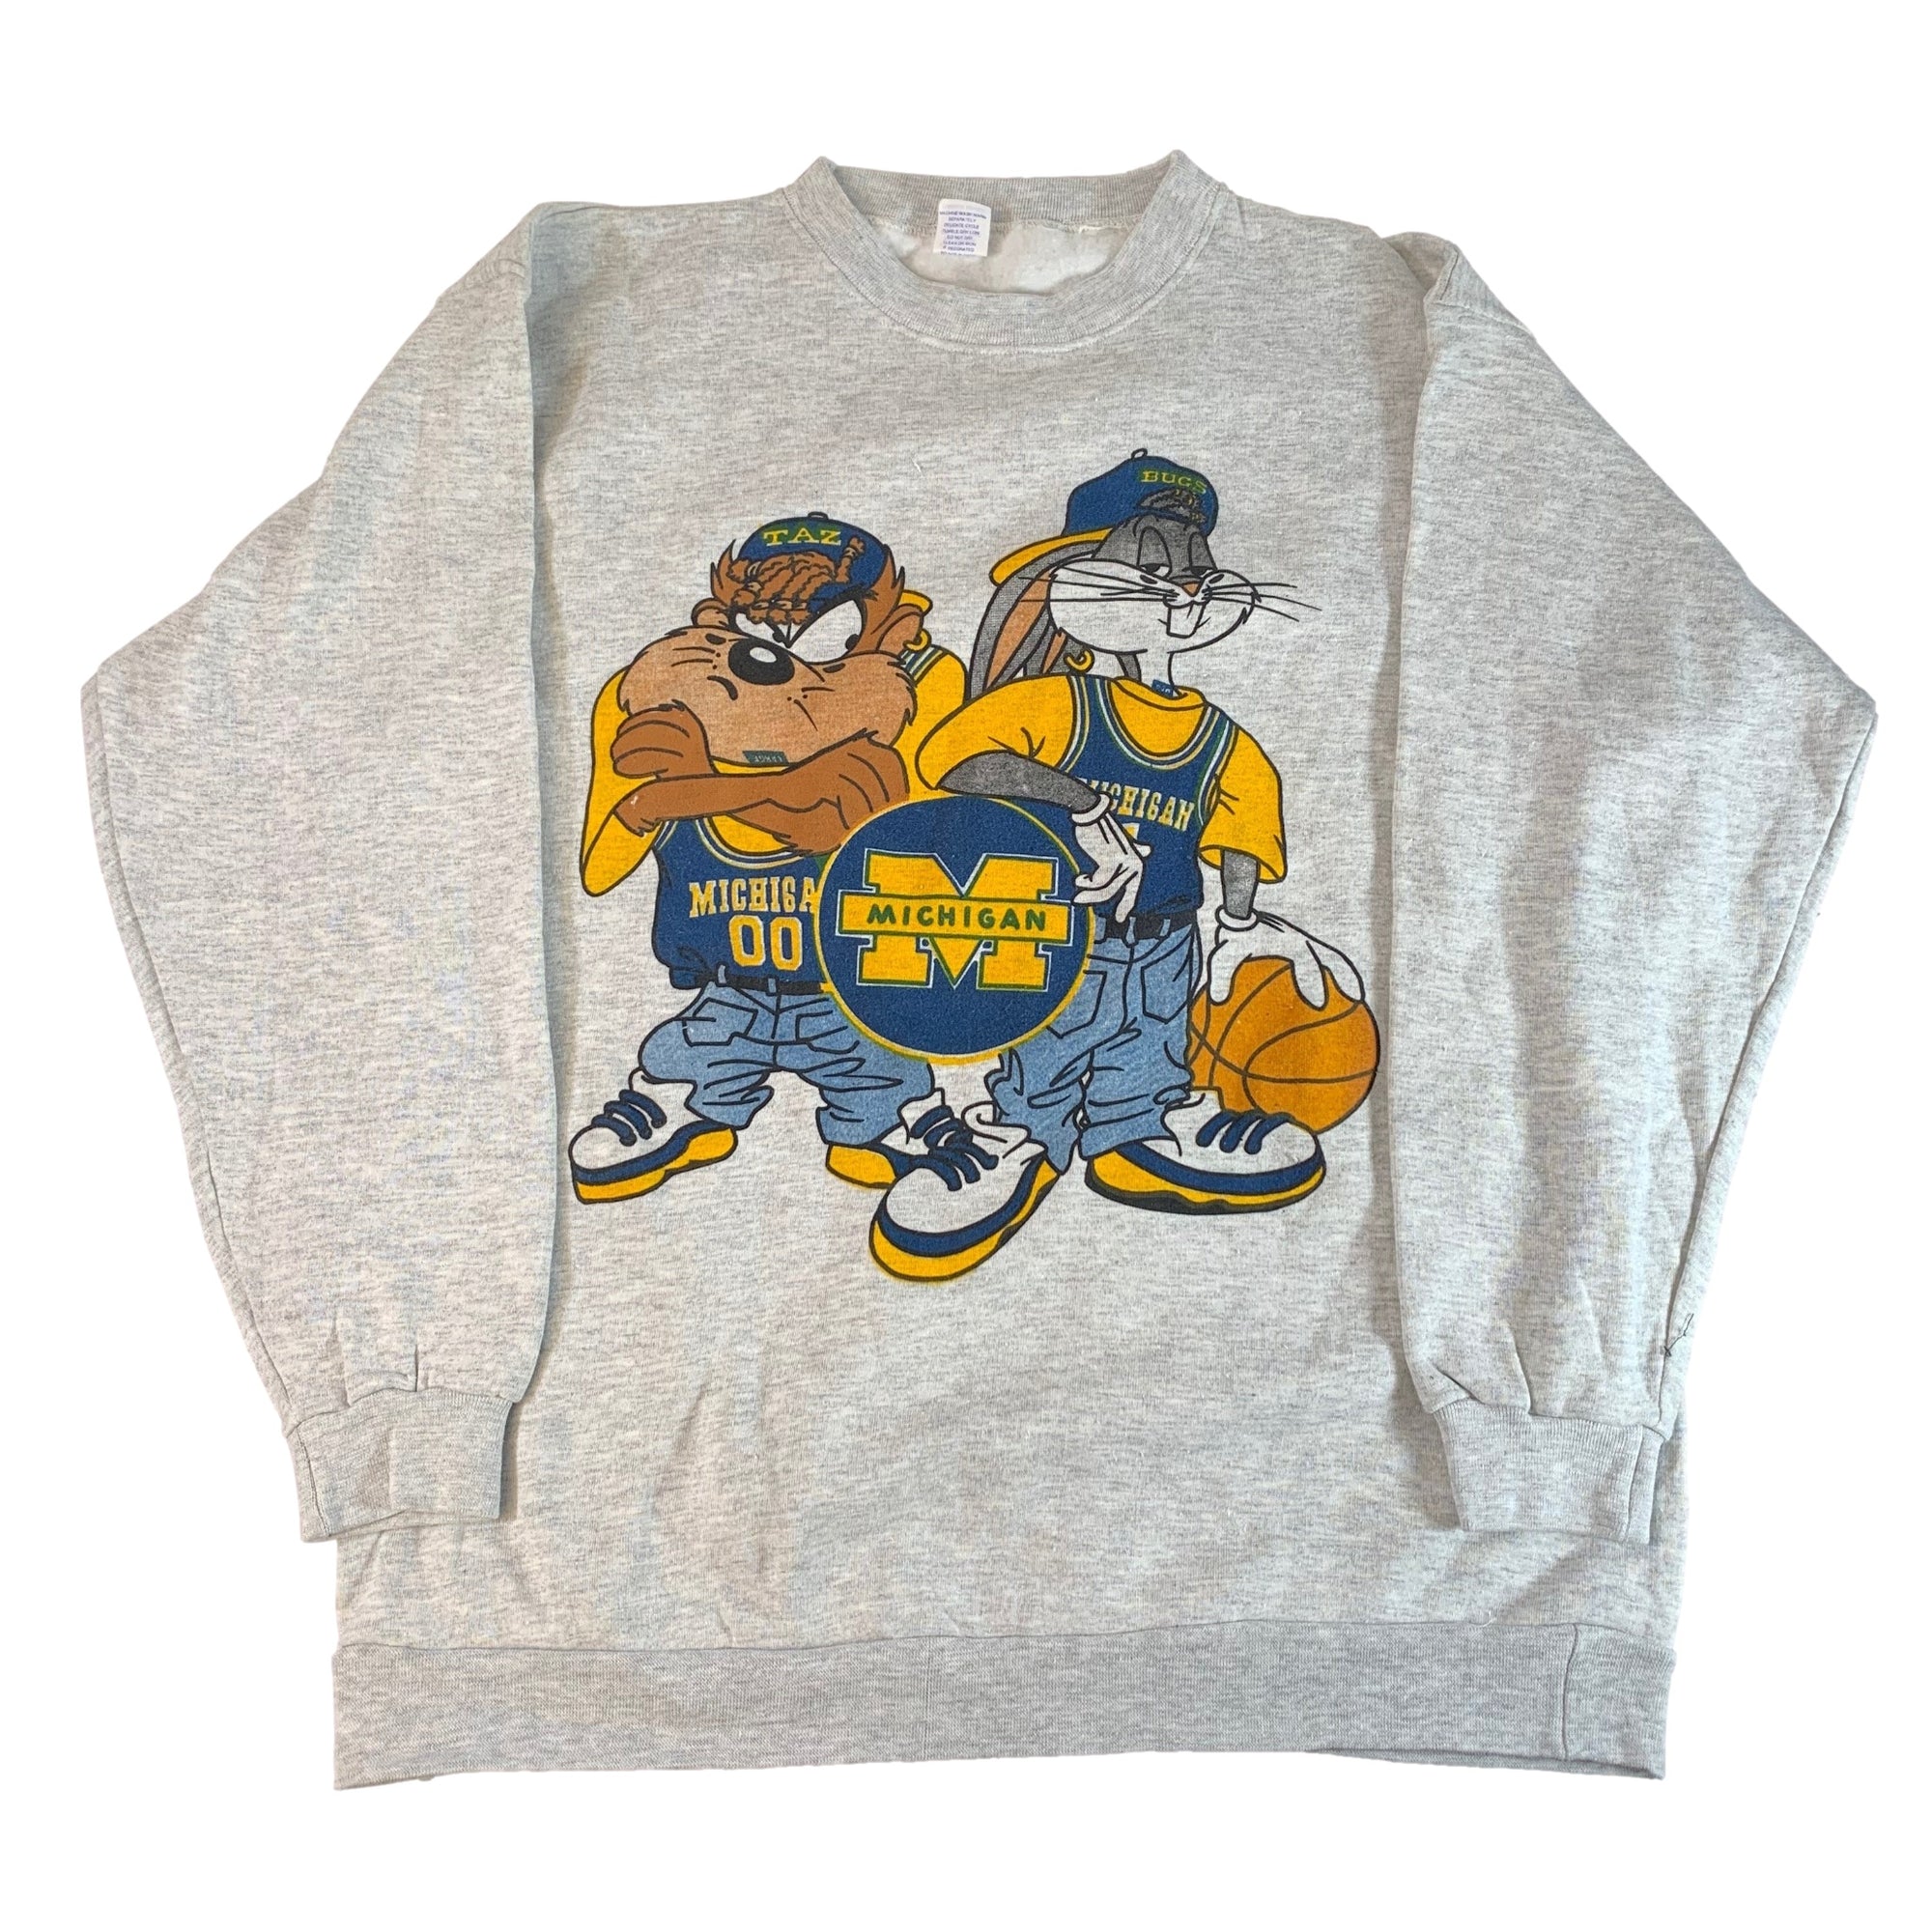 Vintage Michigan "Looney Tunes" Crewneck Sweatshirt - jointcustodydc